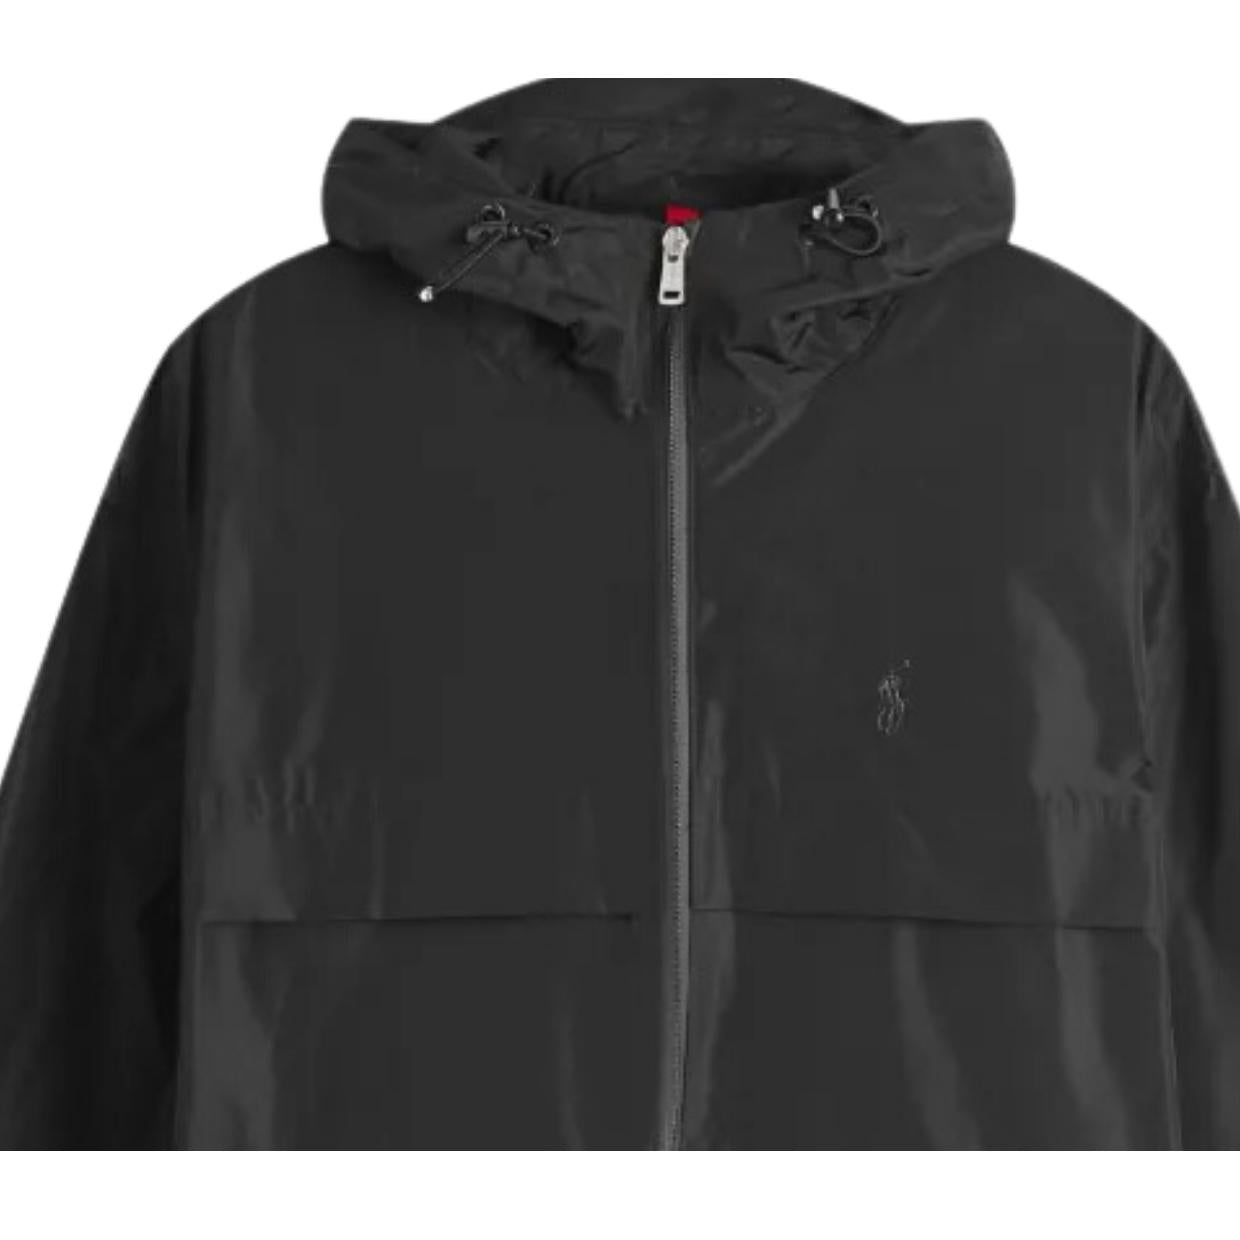 Polo Ralph Lauren Black Windbreaker Jacket